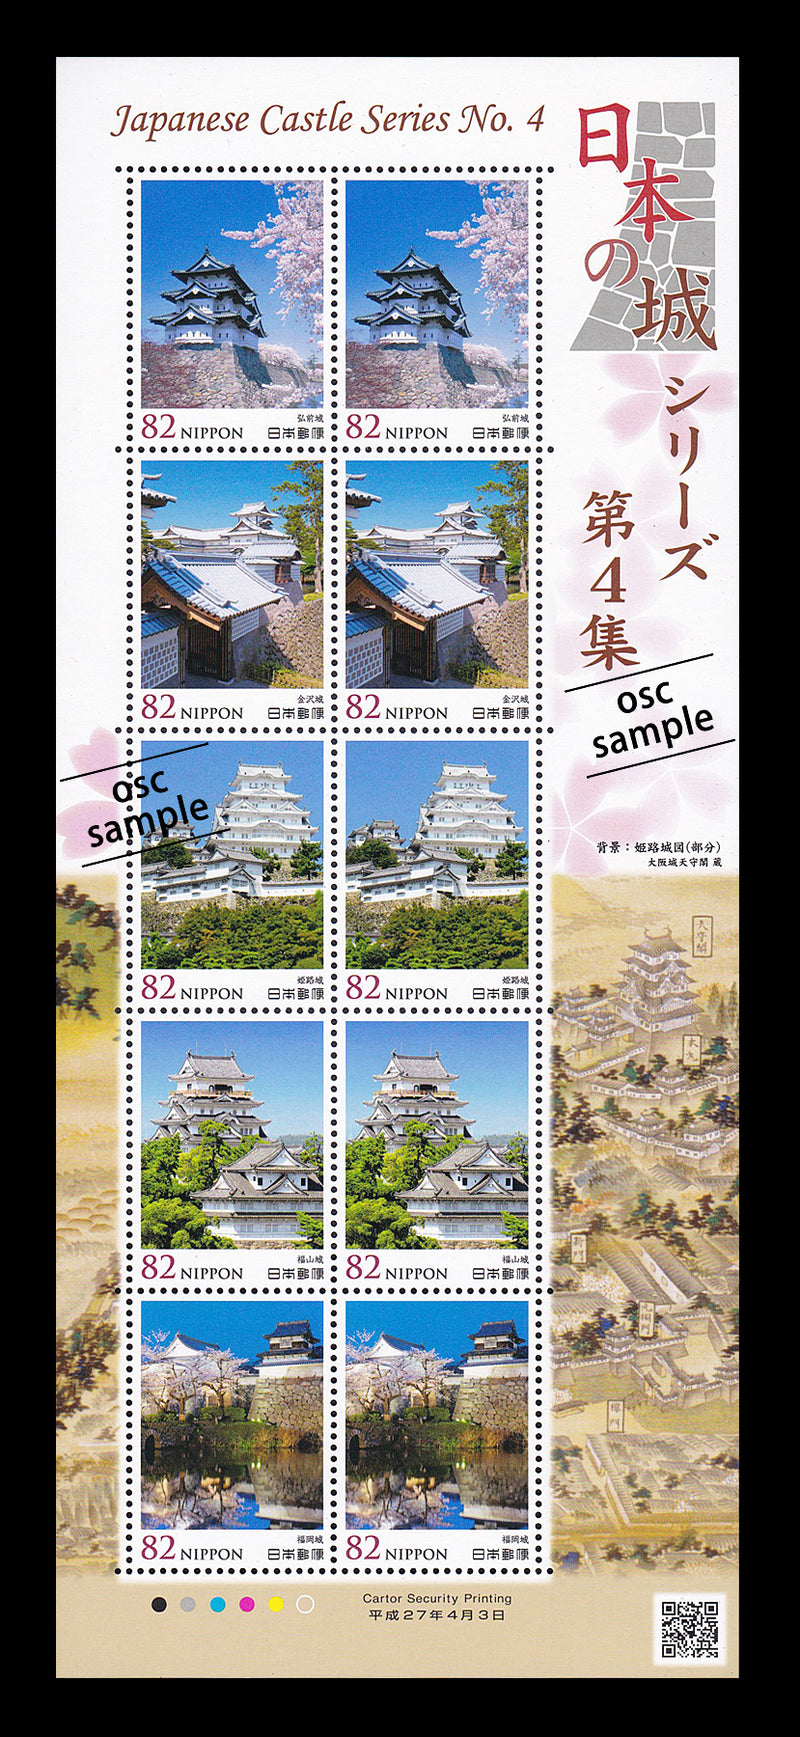 Japanese Castle Series No.4